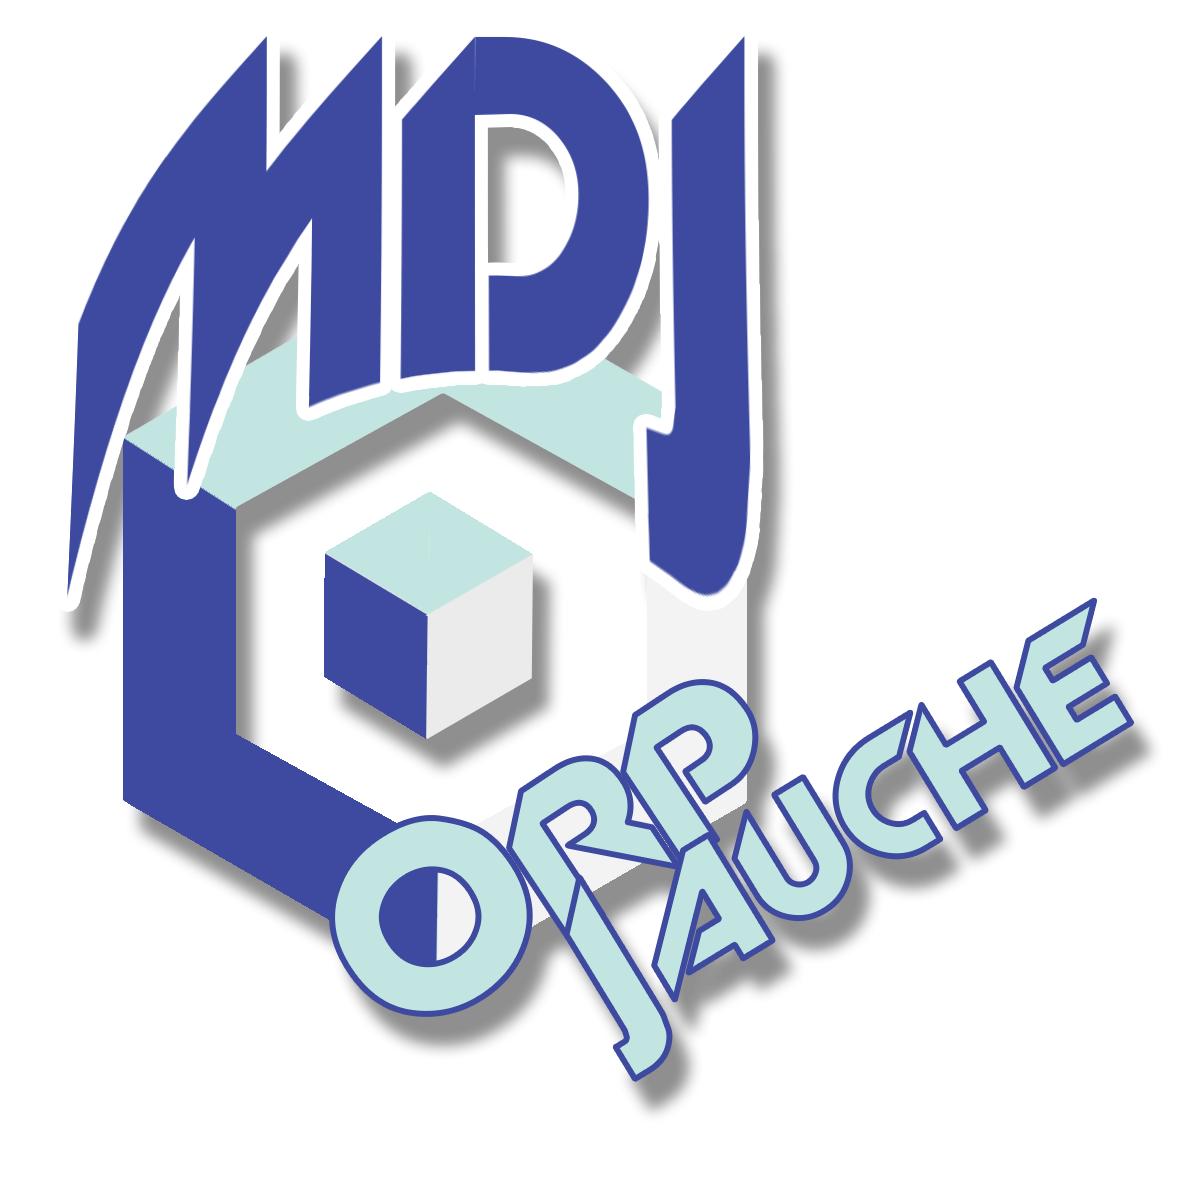 MDJ Orp-Jauche